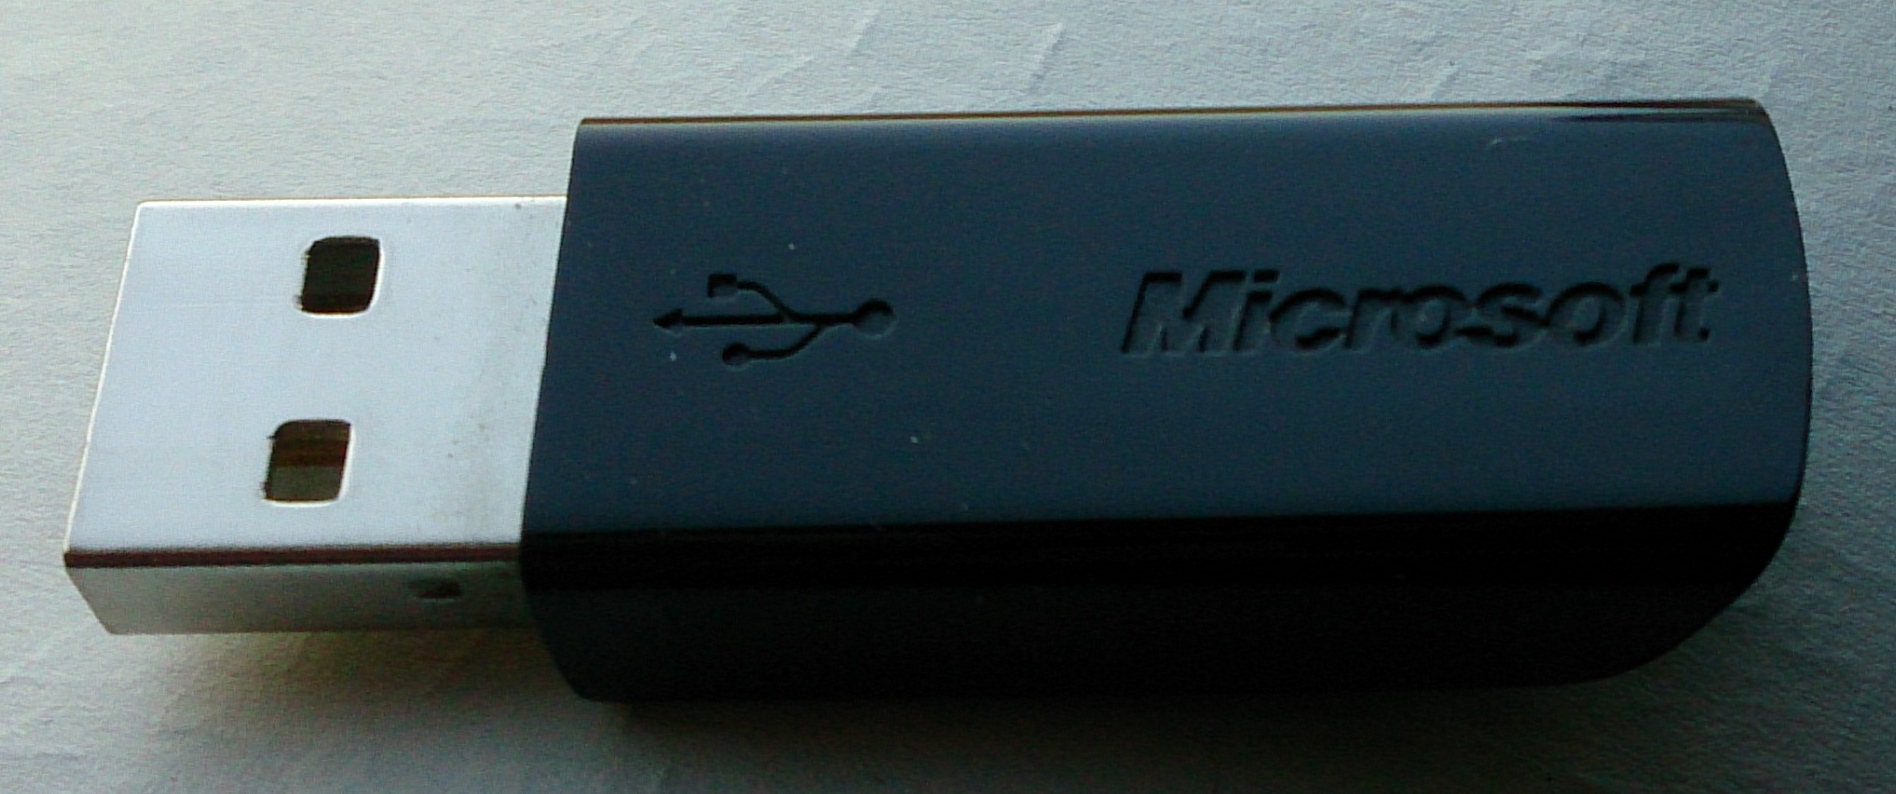 File:Microsoft Wireless Mouse 5000-6.jpg - Wikimedia Commons